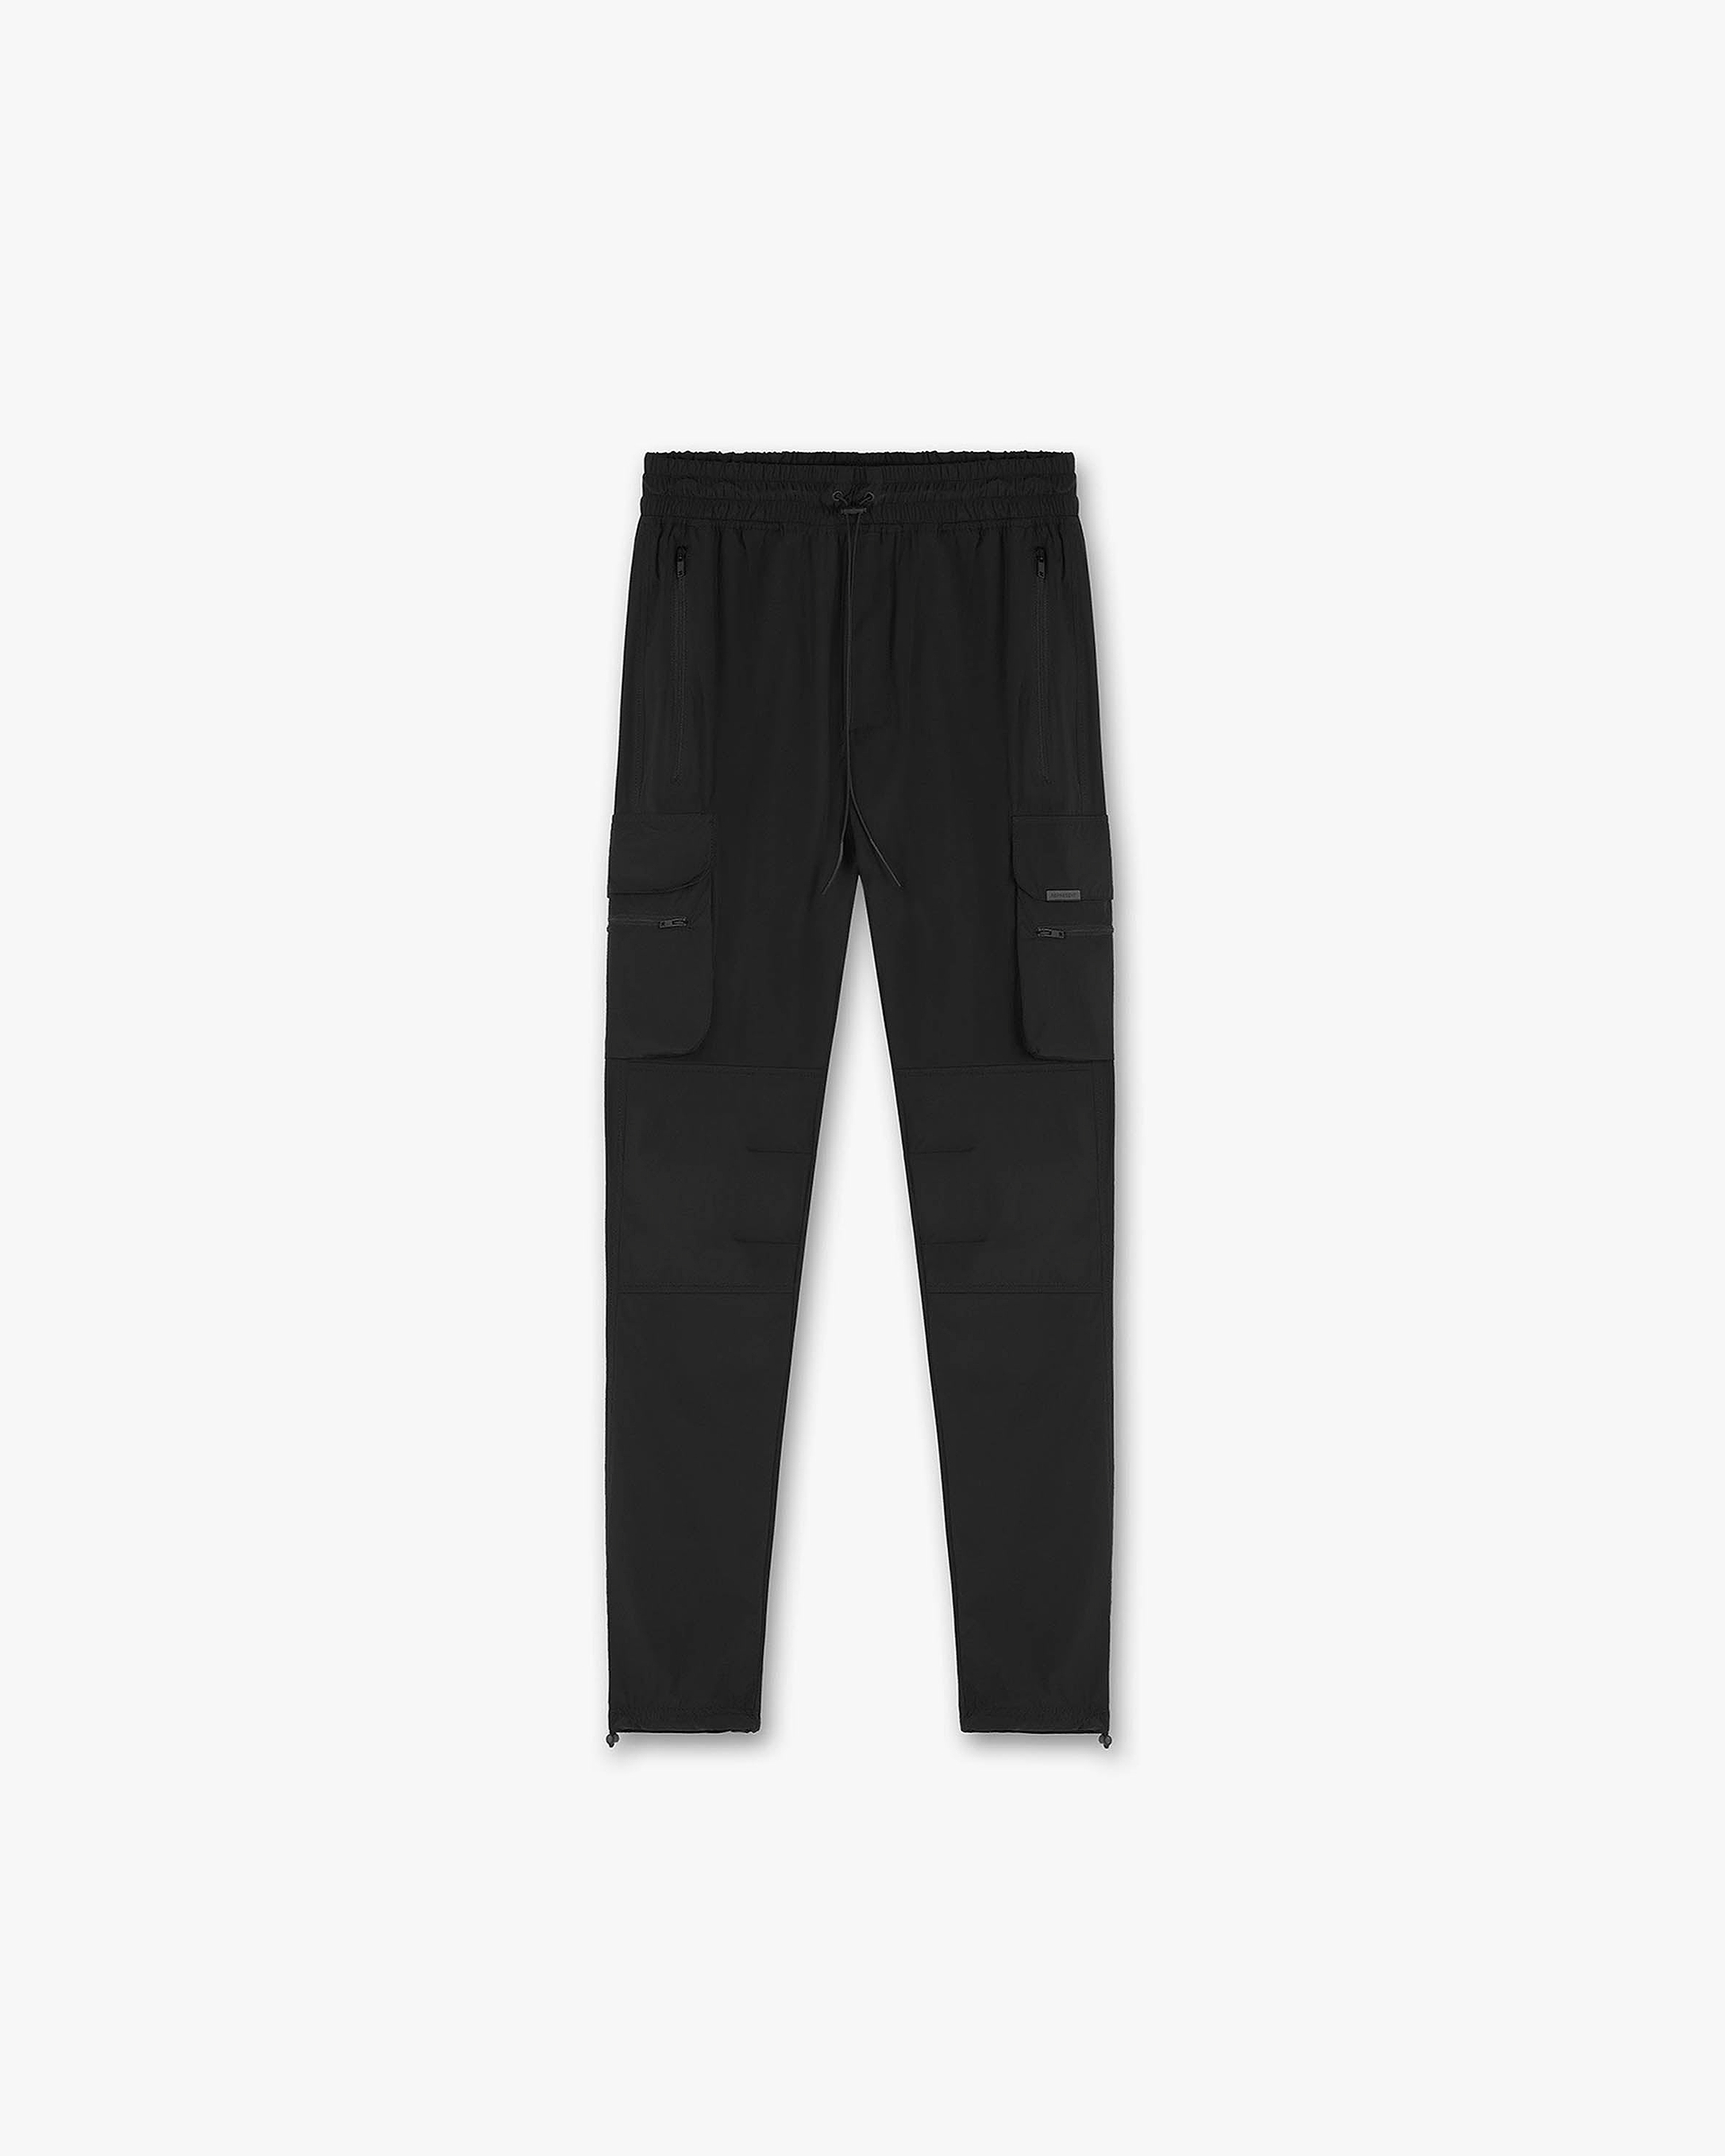 INC INTERNATIONAL CONCEPTS~Black Pull On Pants ~Zipper Pockets~Size 10